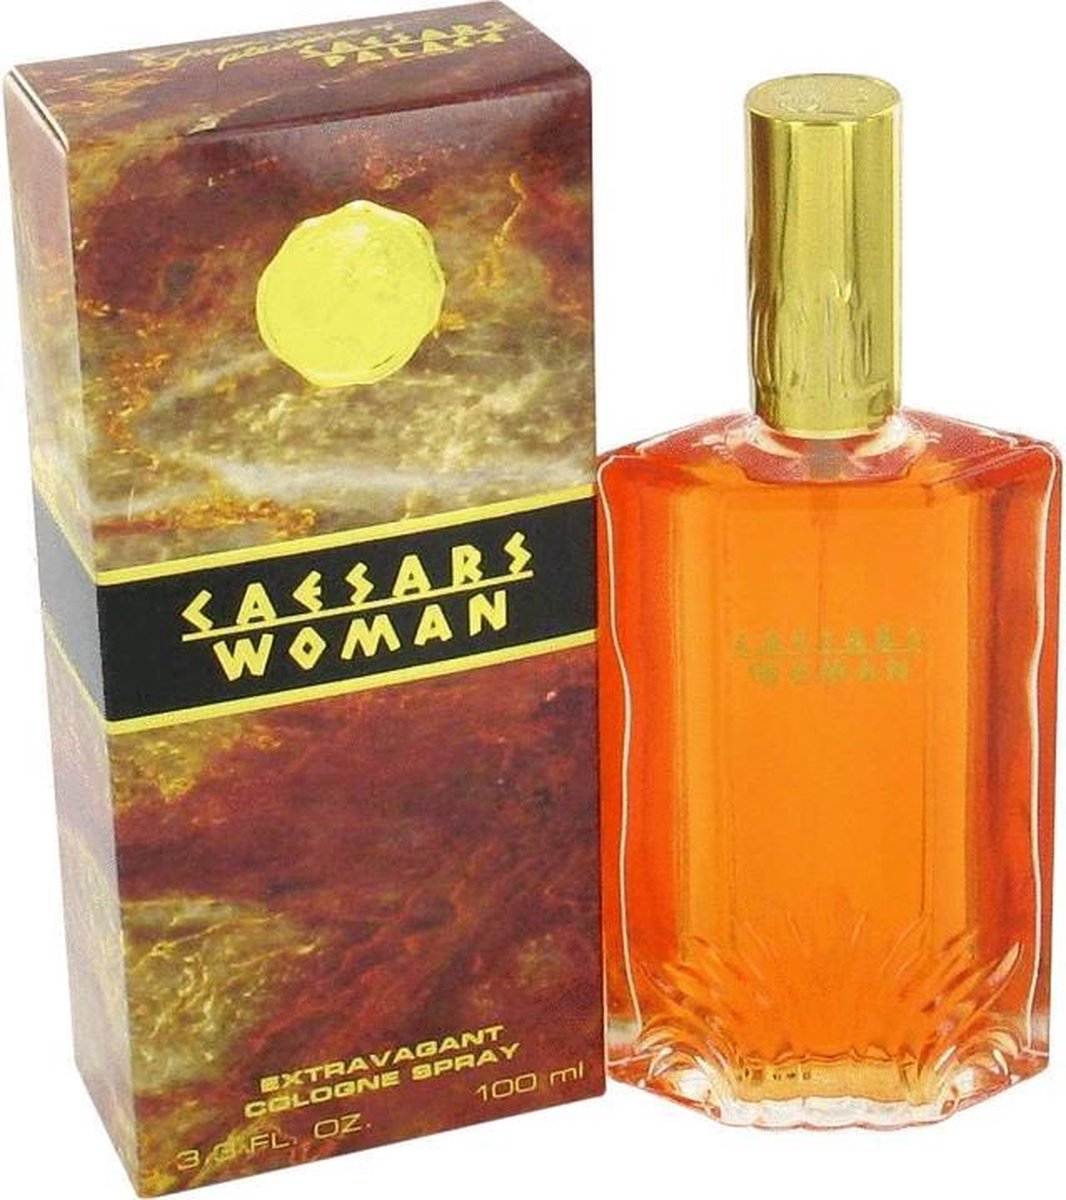 Caesars Woman eau de parfum spray 100 ml